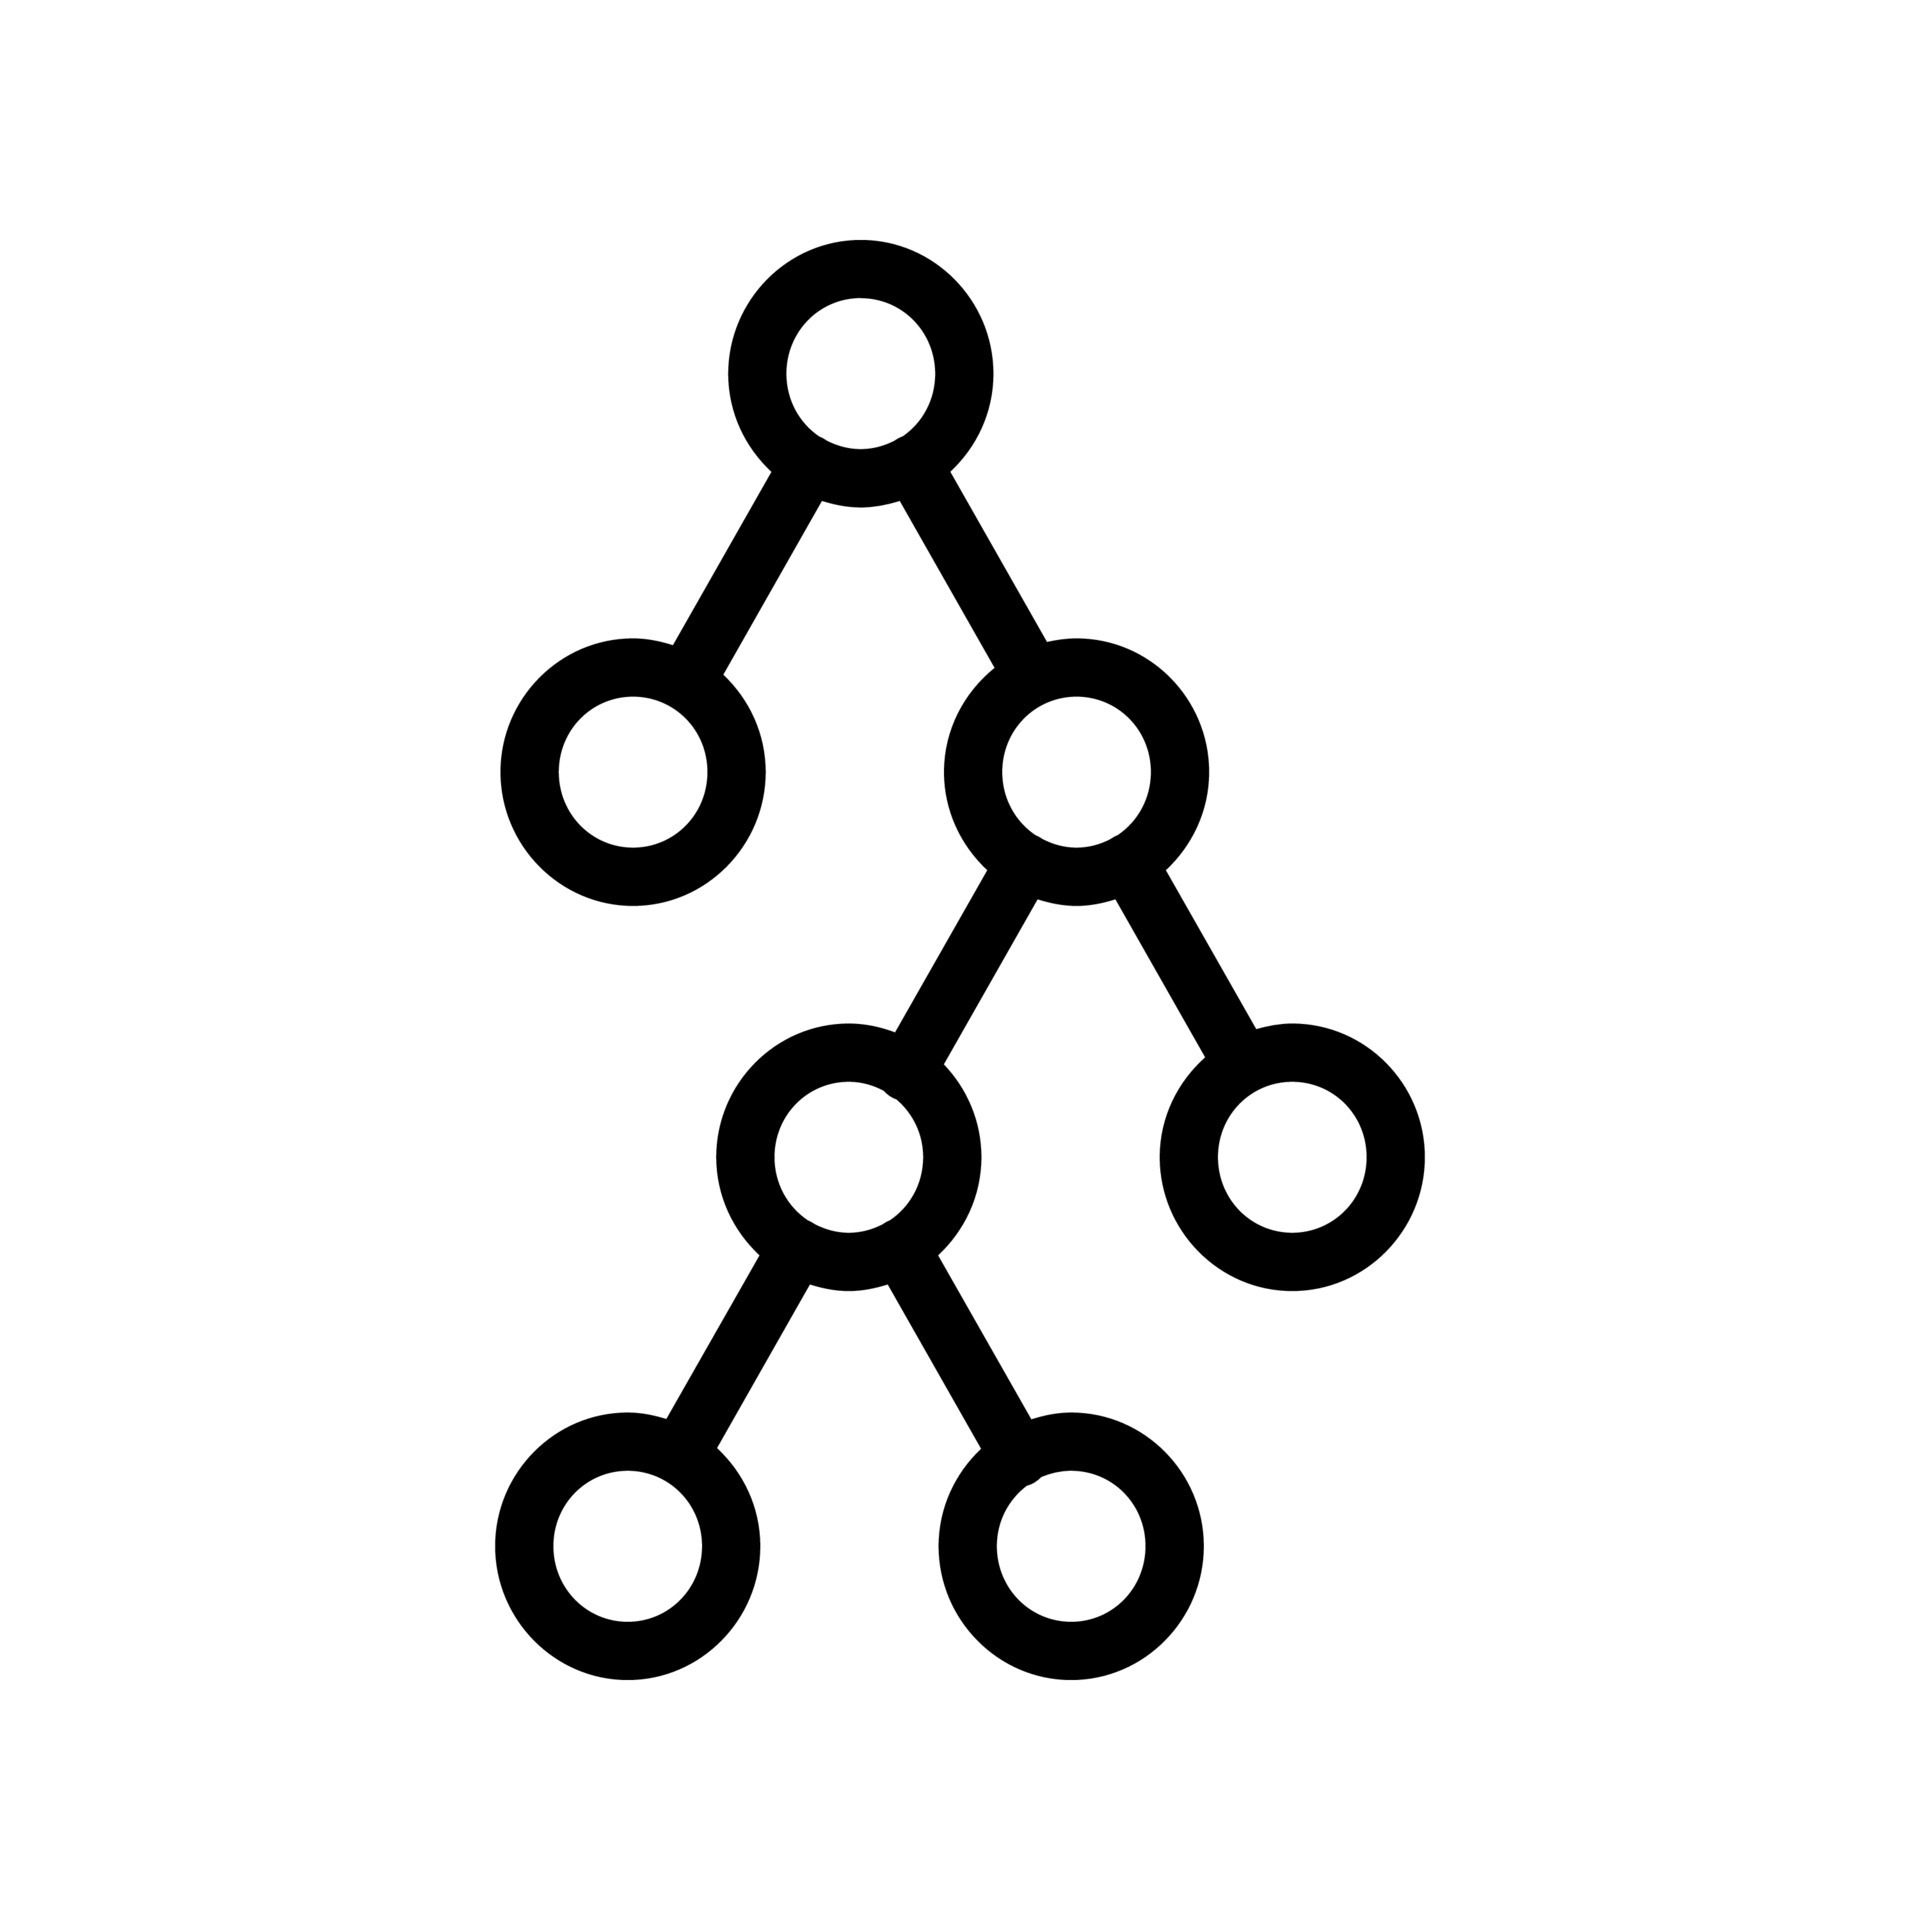 Binary search tree algorithm implemented in TypeScript